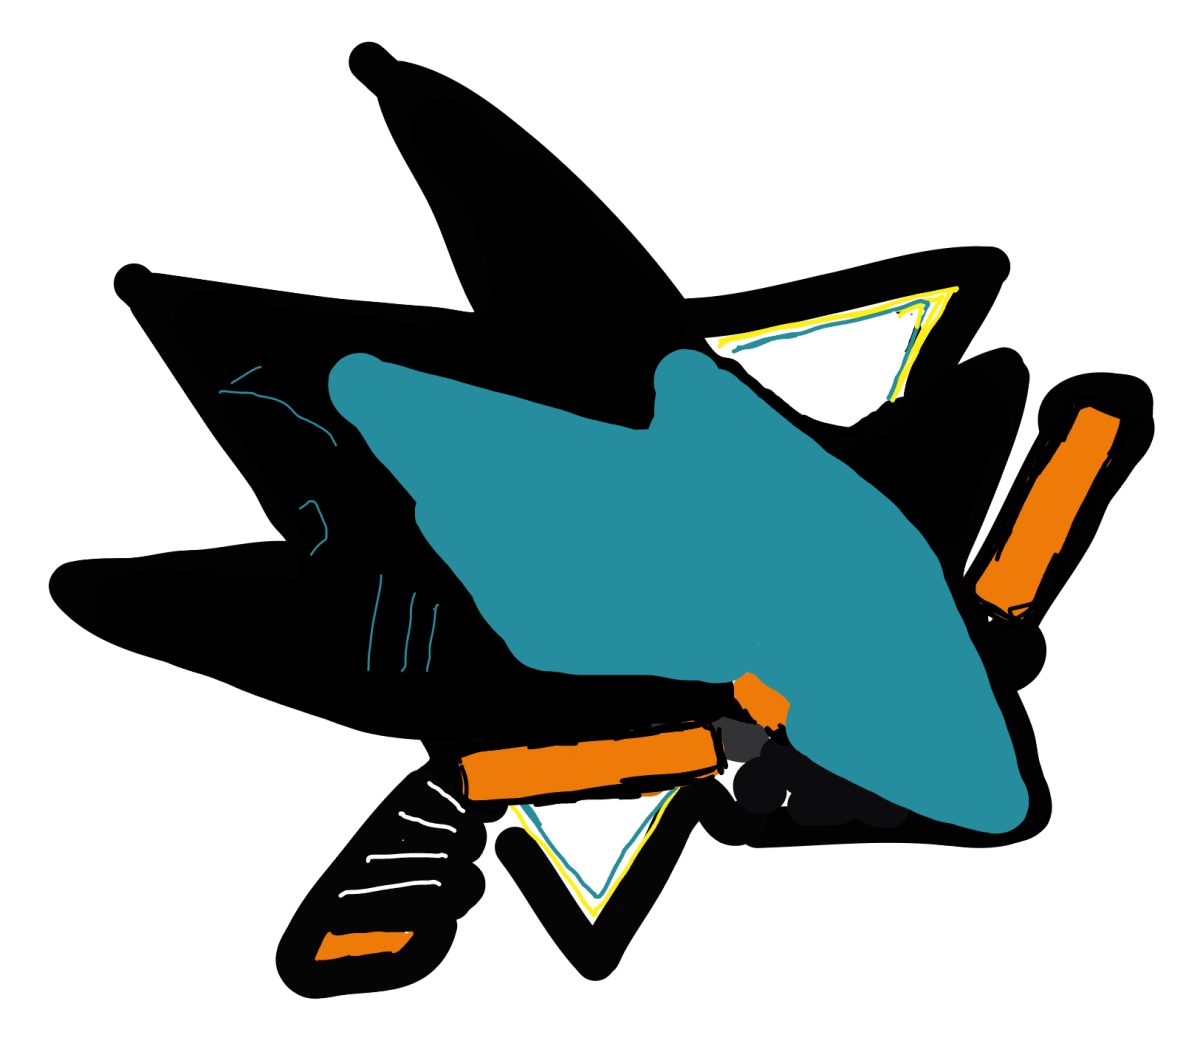 The San Jose Sharks team logo.